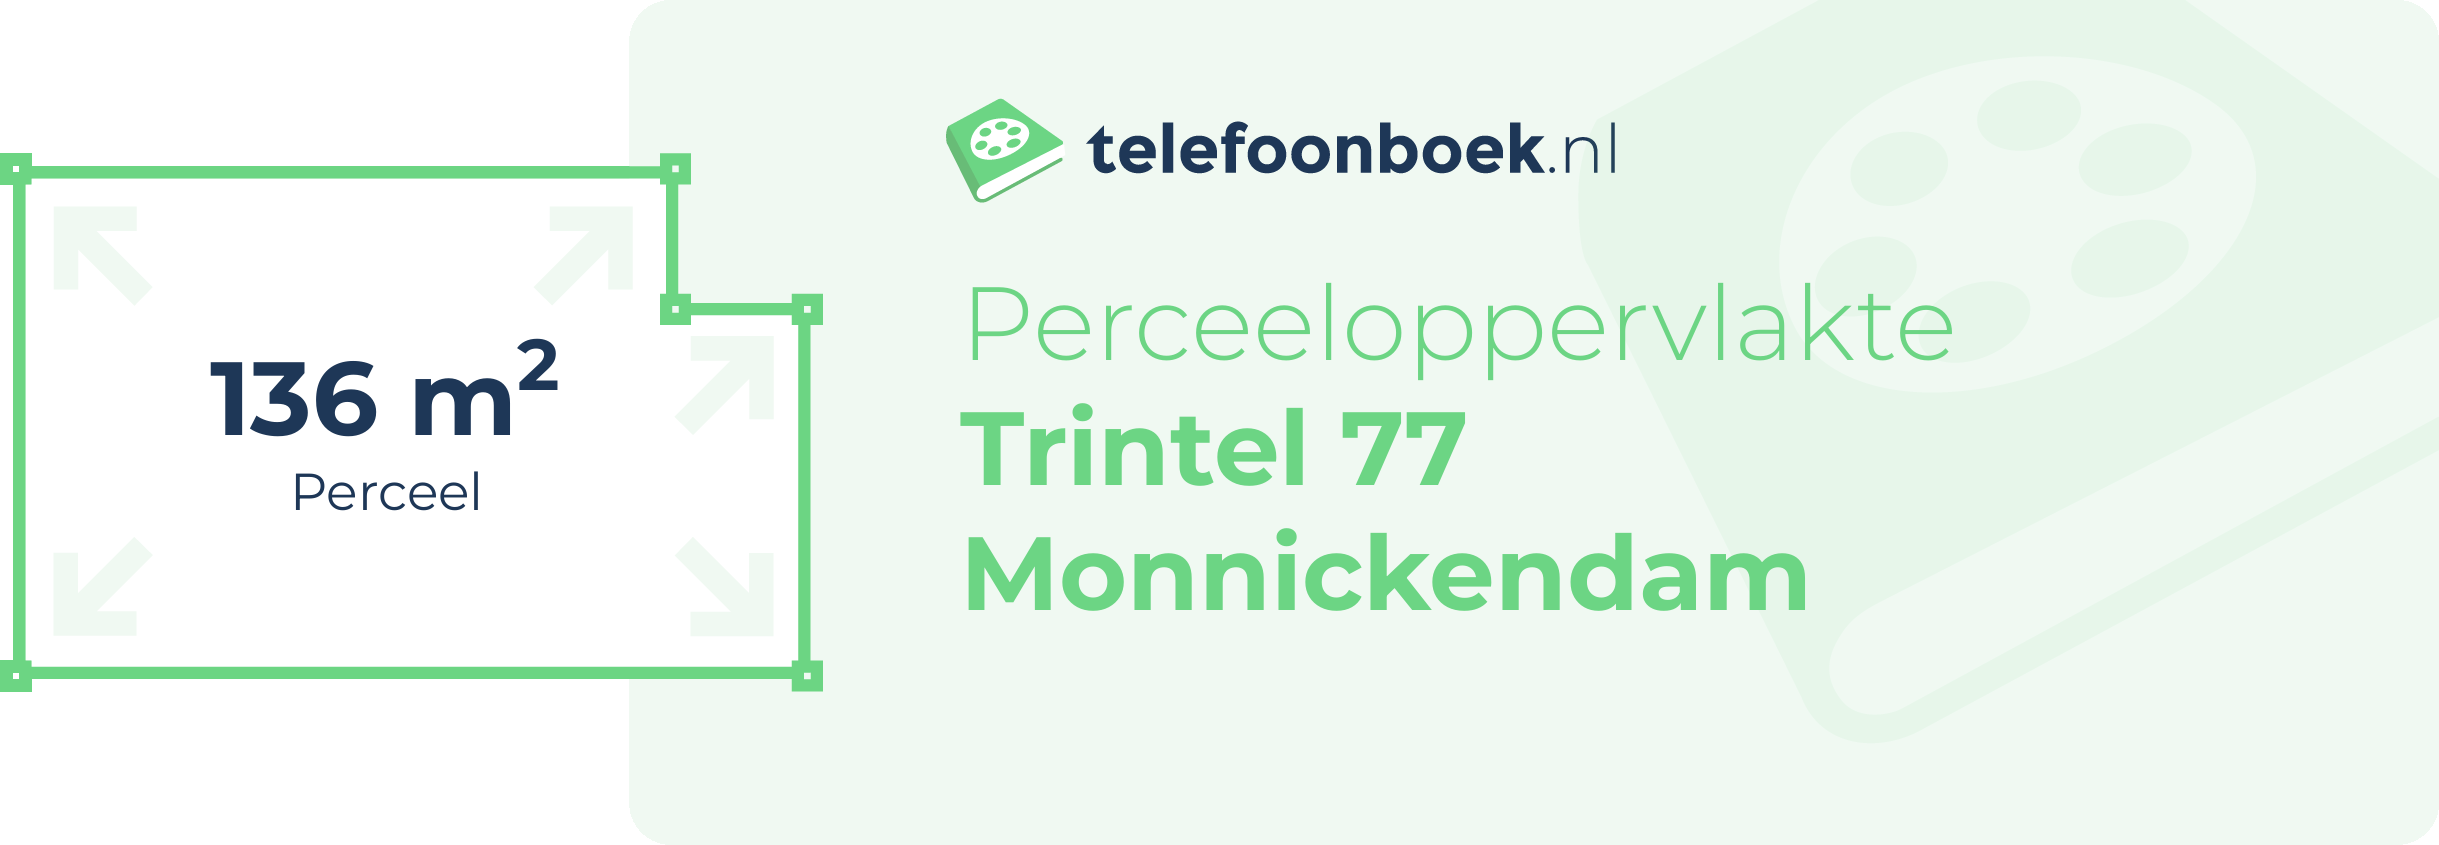 Perceeloppervlakte Trintel 77 Monnickendam